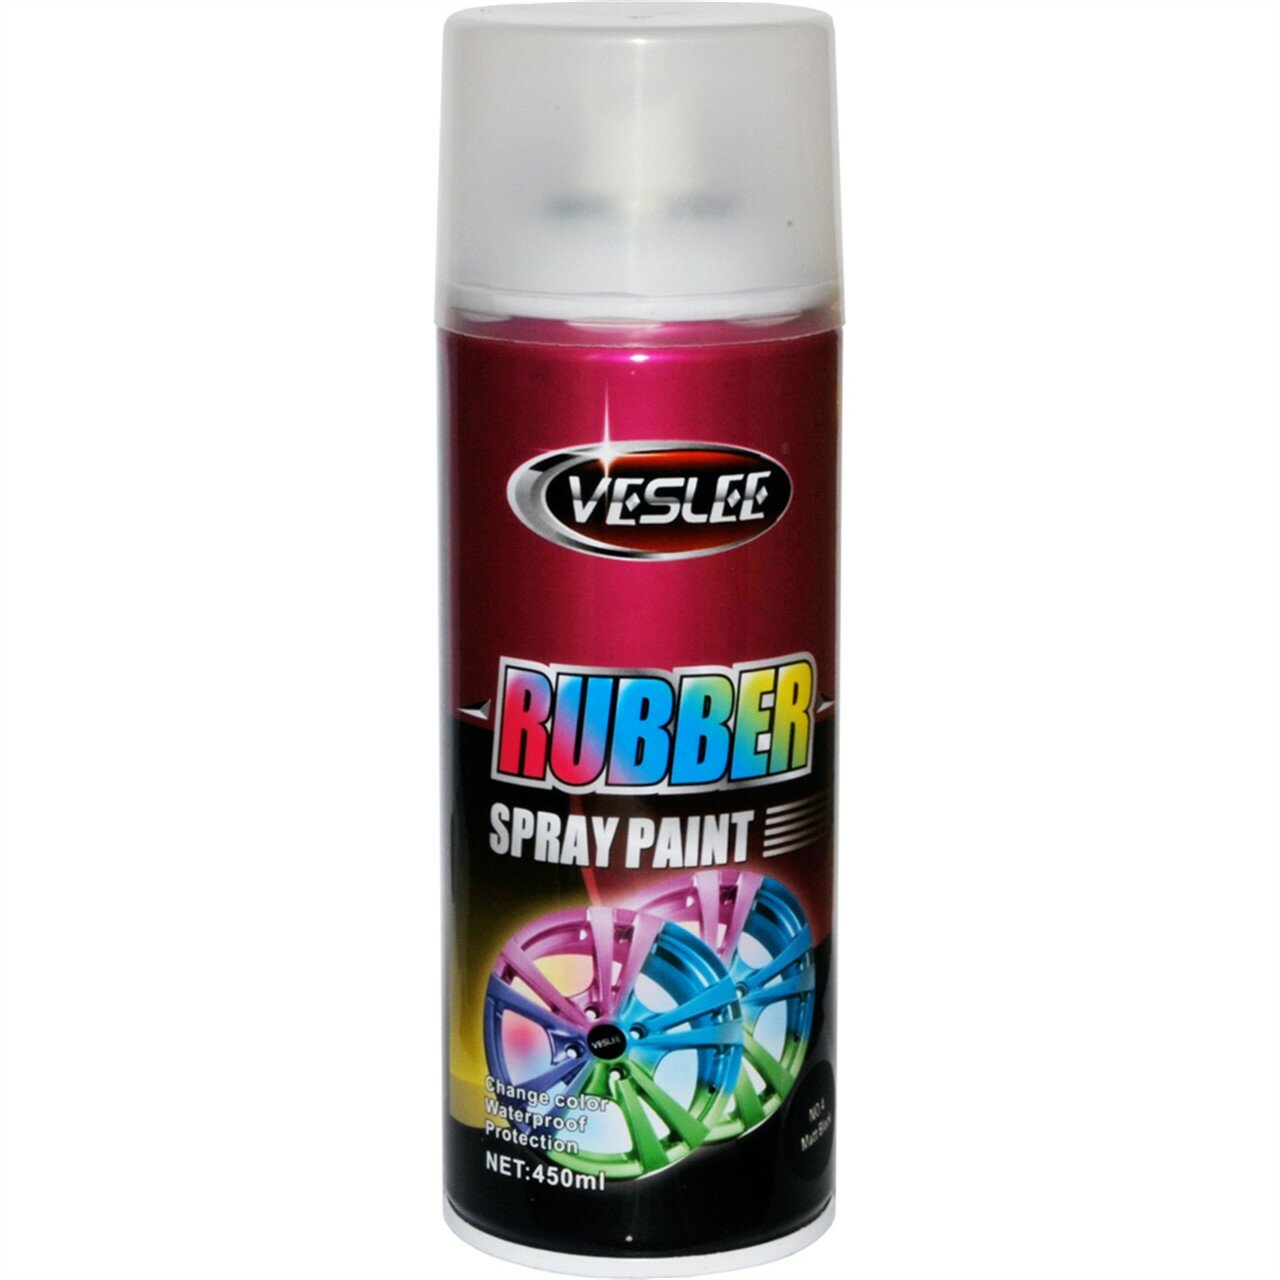 Жидкая резина Veslee Rubber Spray Paint Fluorescent Blue, 450 мл